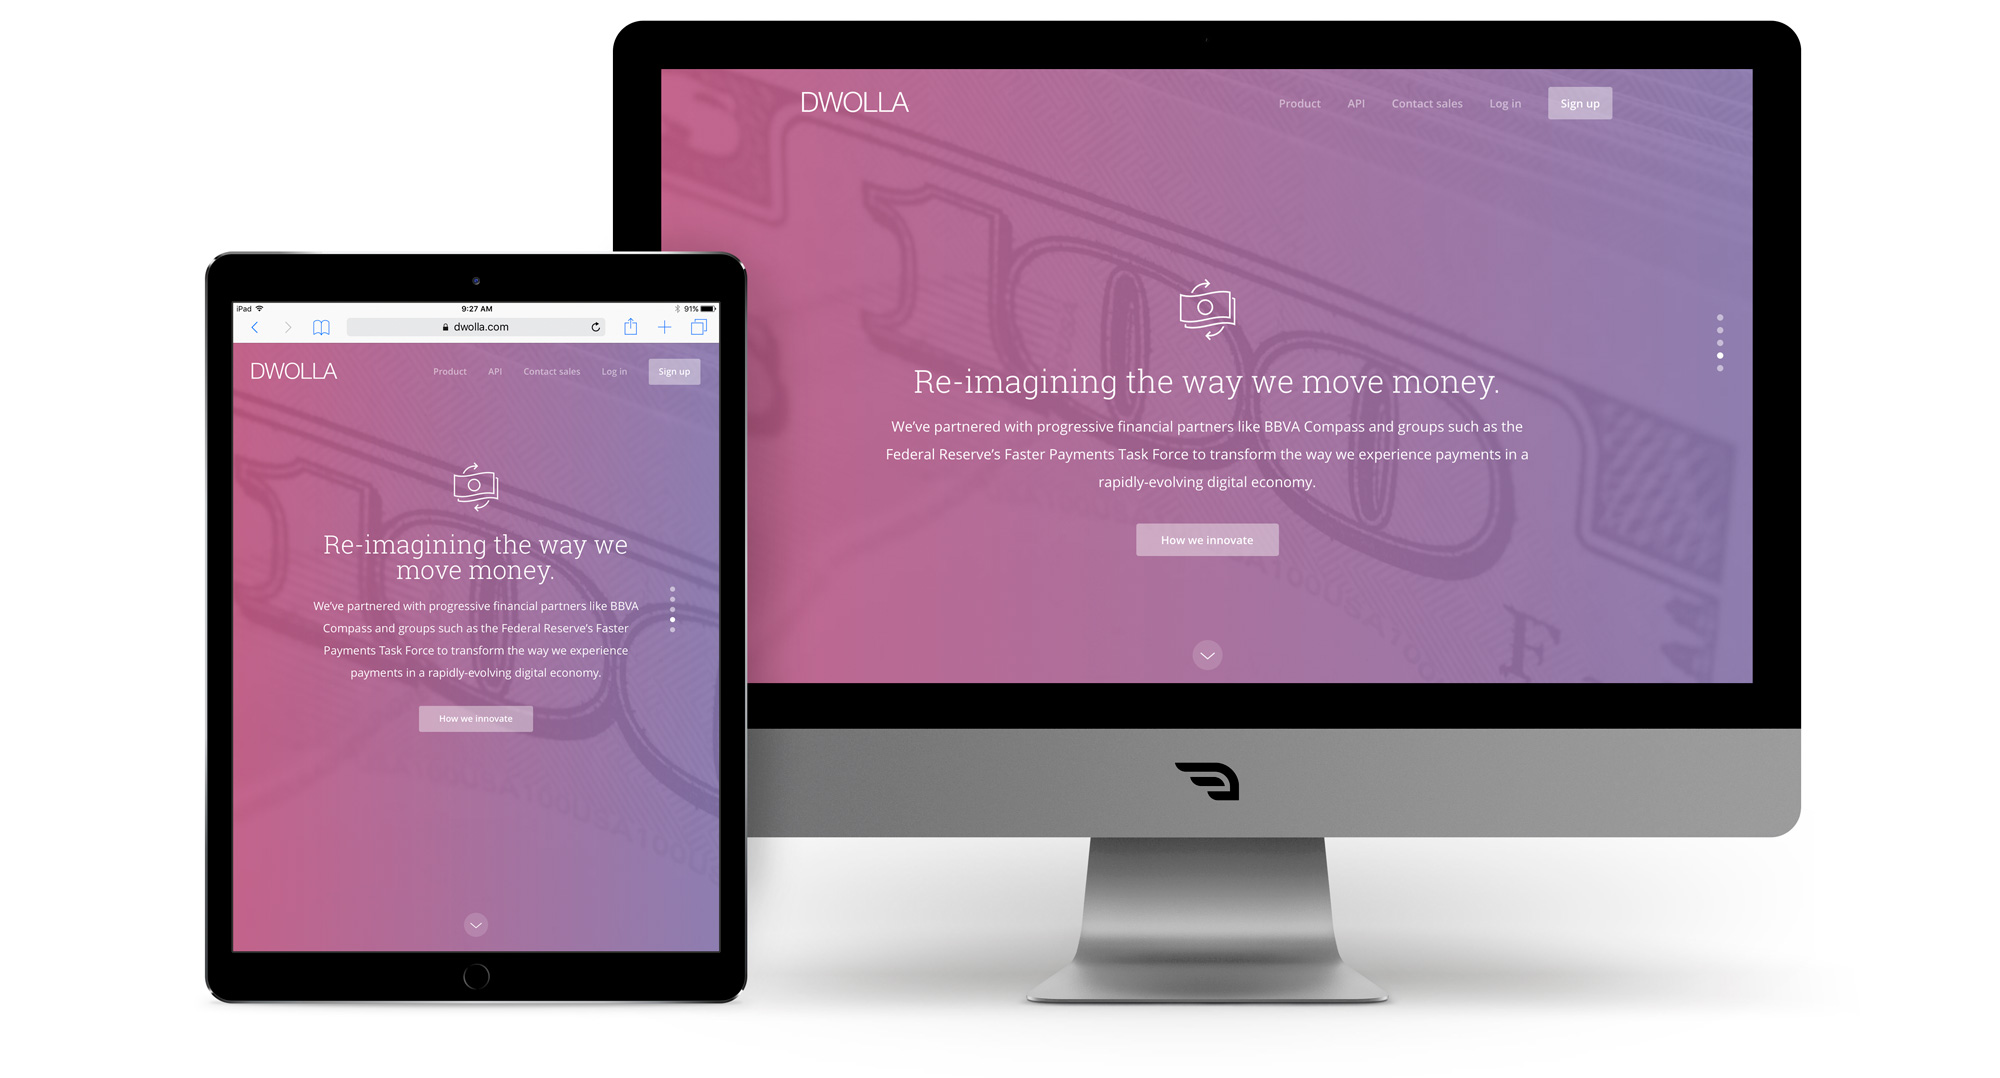 dwolla-home-page-example-imac-ipad